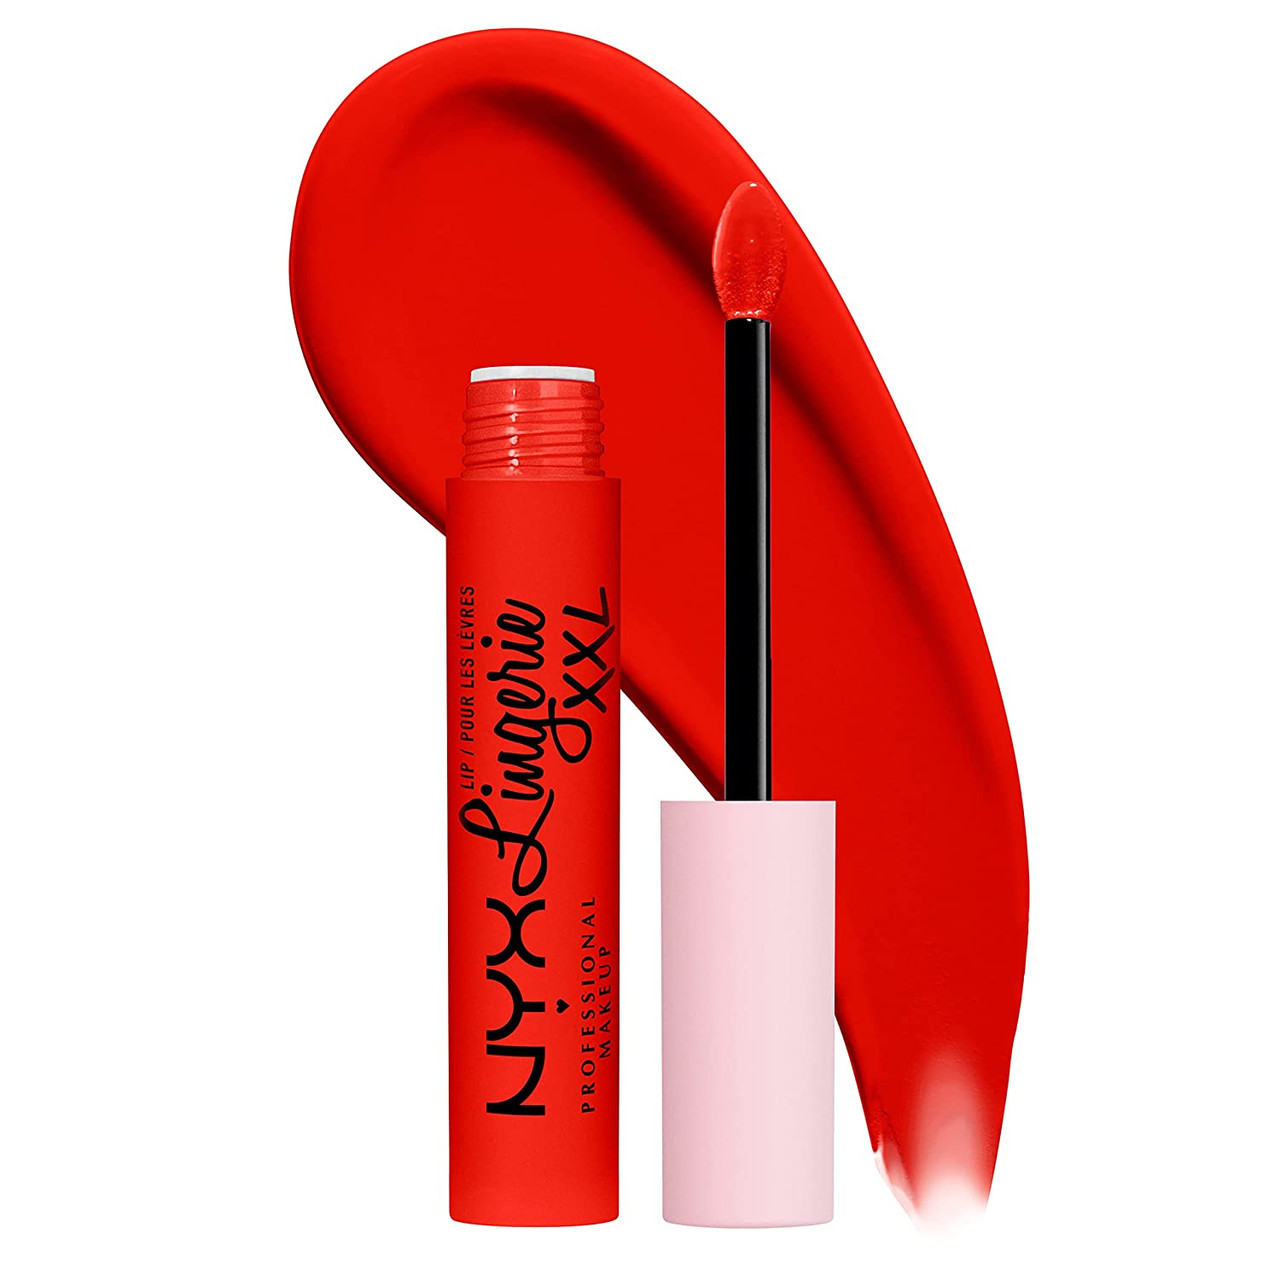 Fuego XXL PROFESSIONAL MAKEUP Lip On Lingerie Matte Liquid Lipstick NYX Red) - (Fire